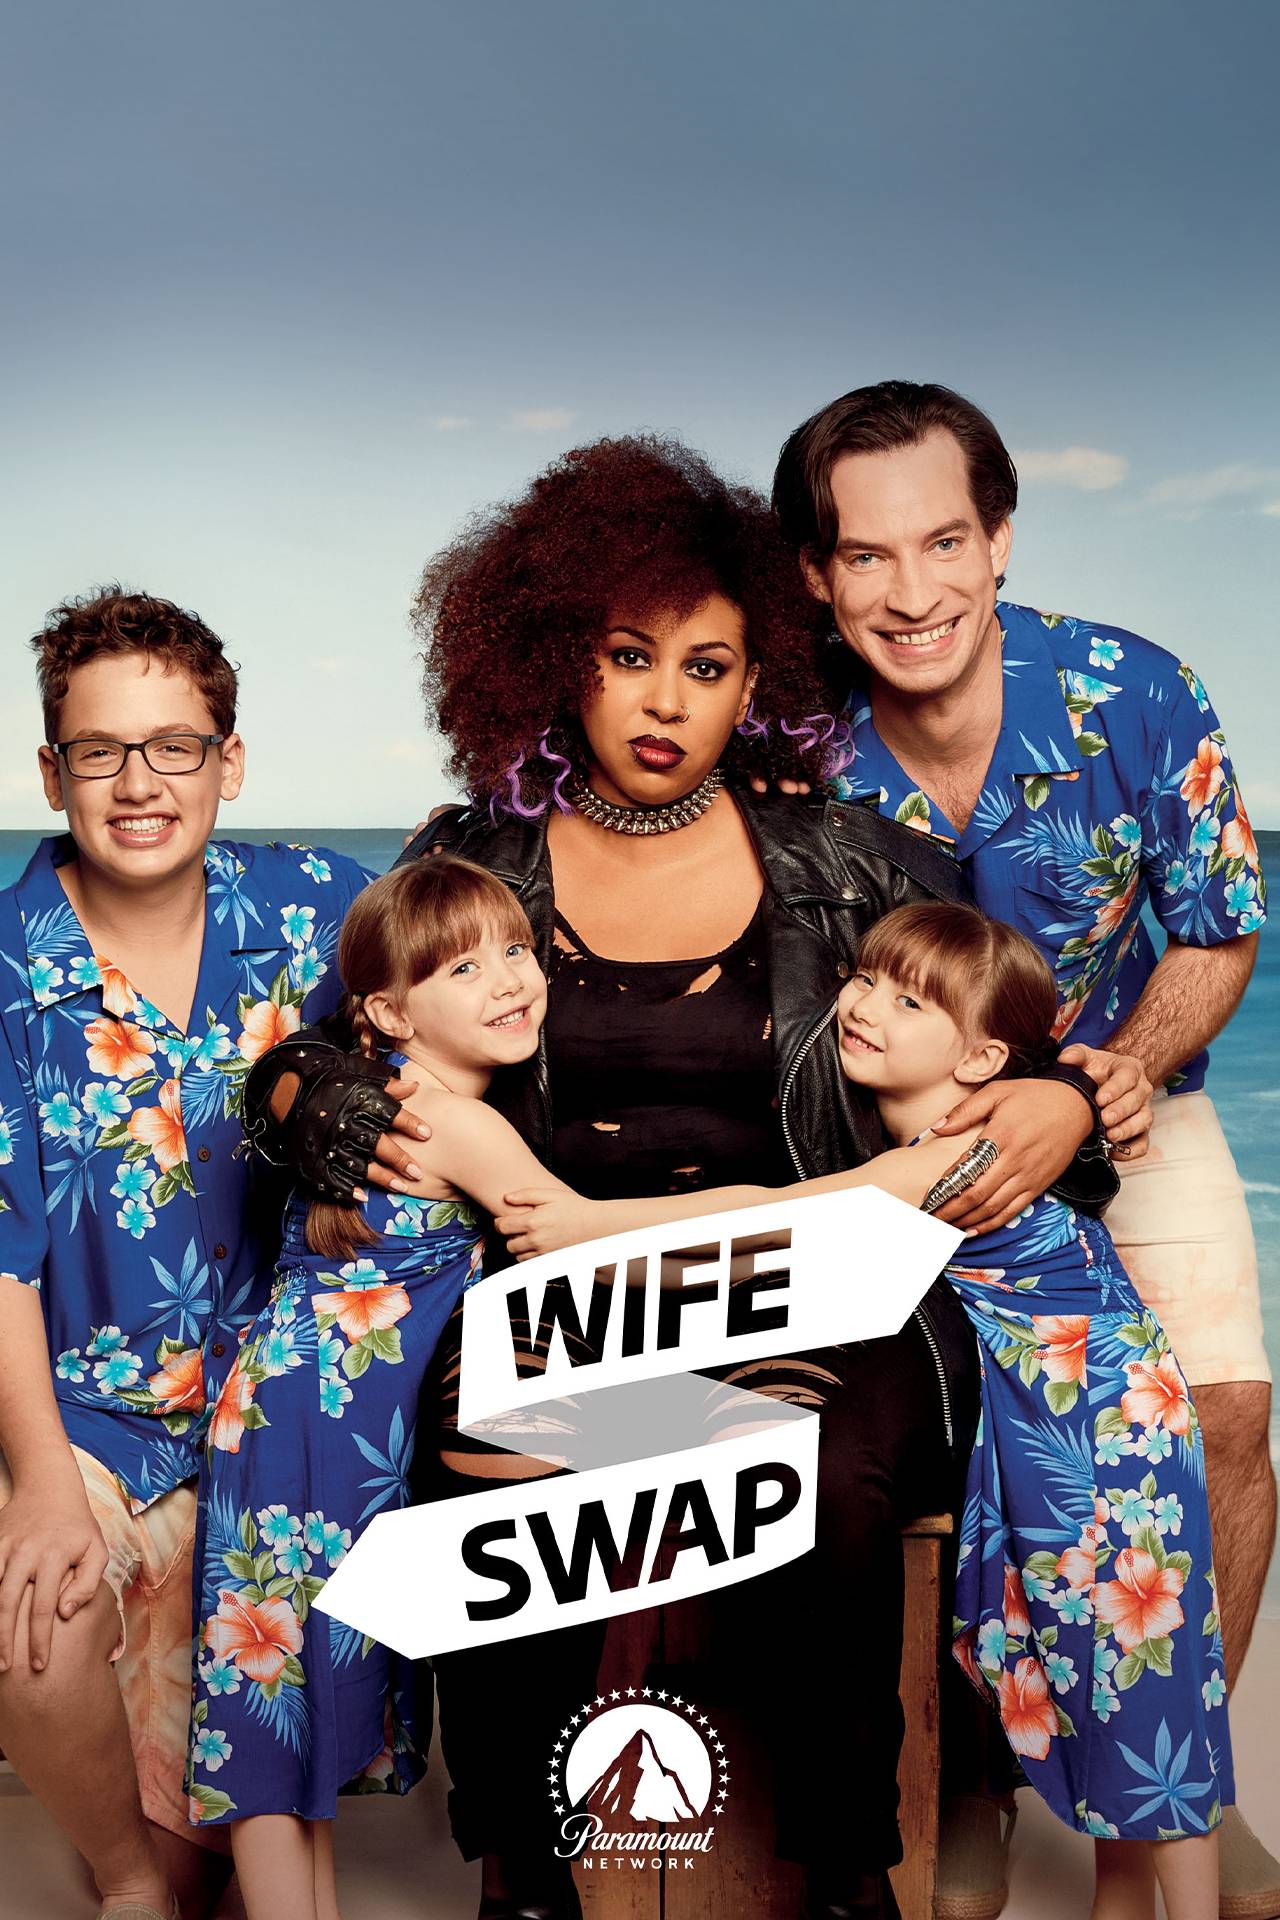 david kickert recommends True Wife Swap Stories